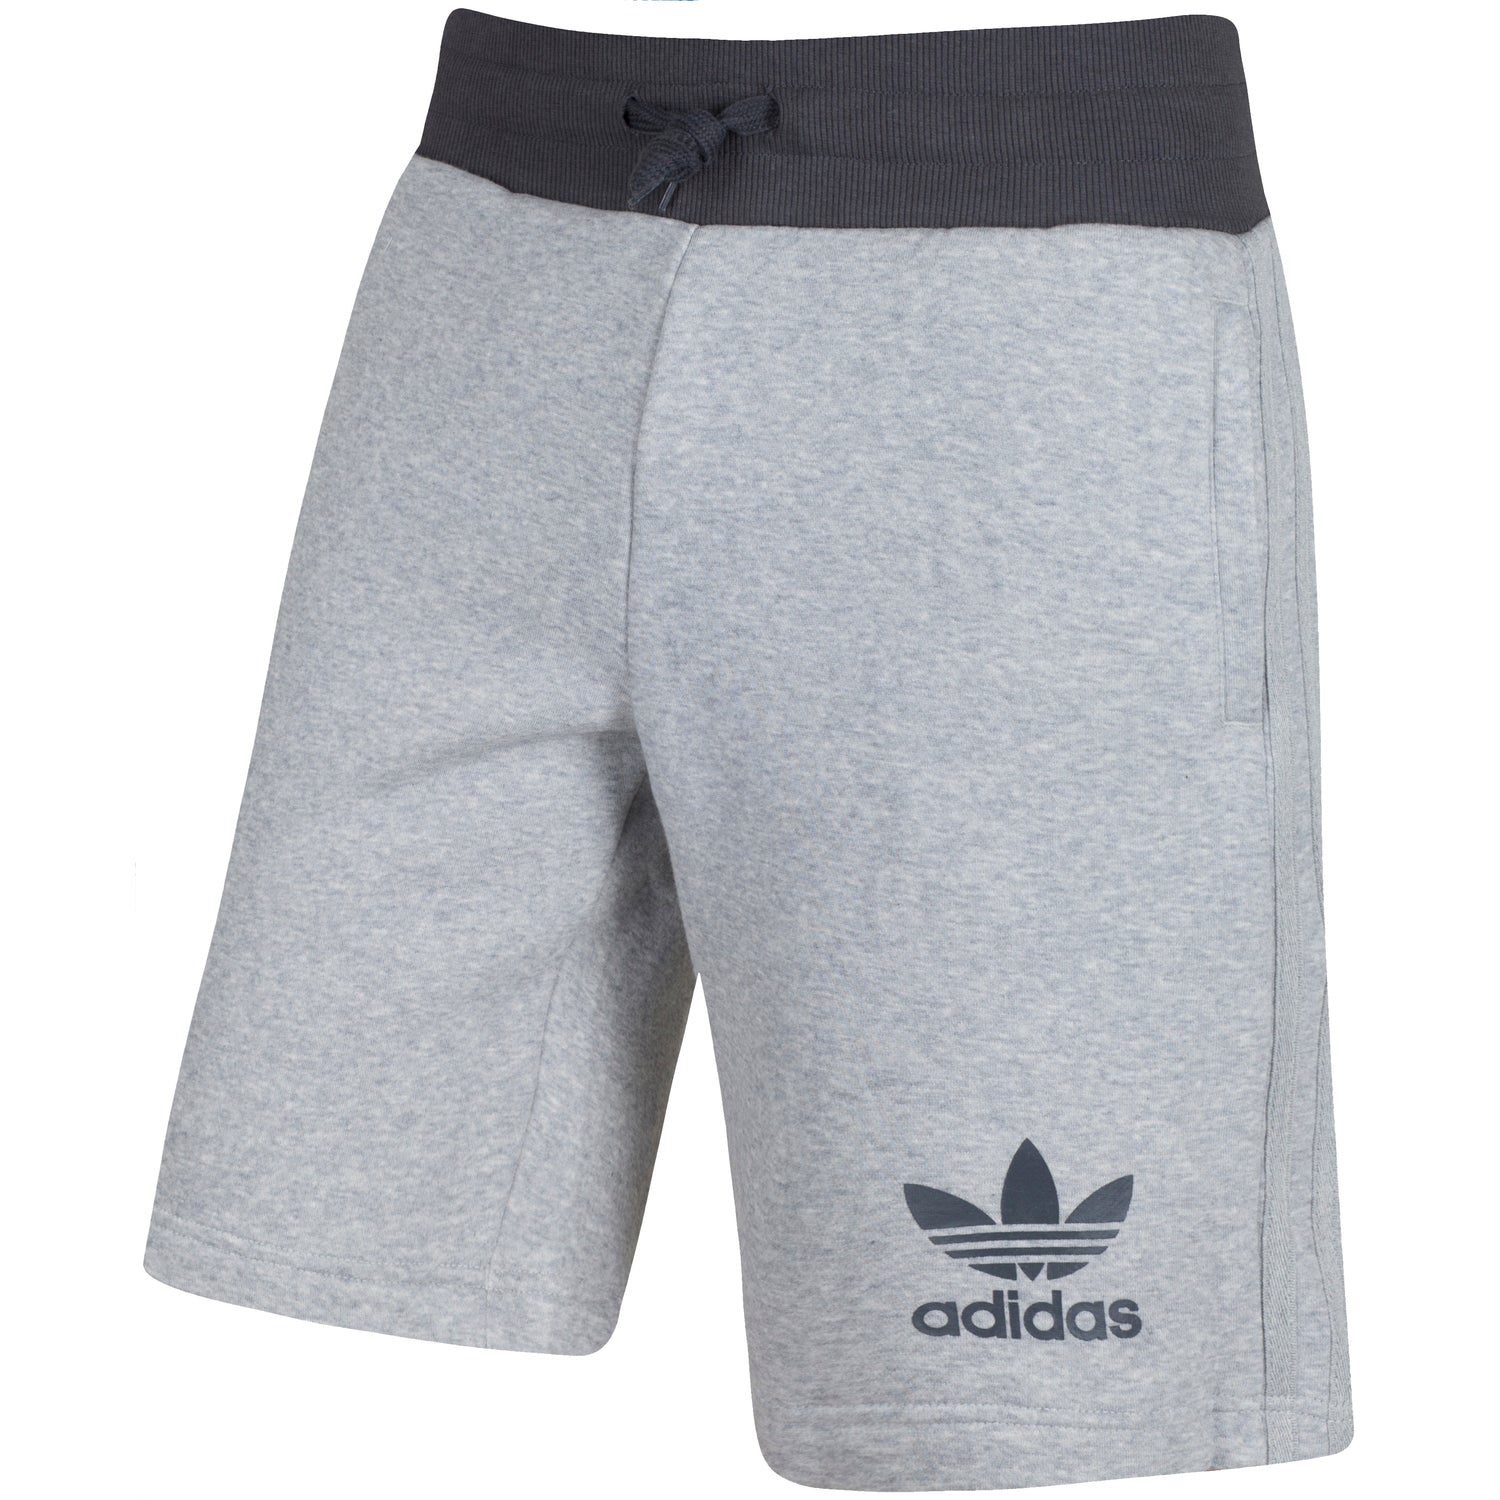 adidas grey fleece shorts